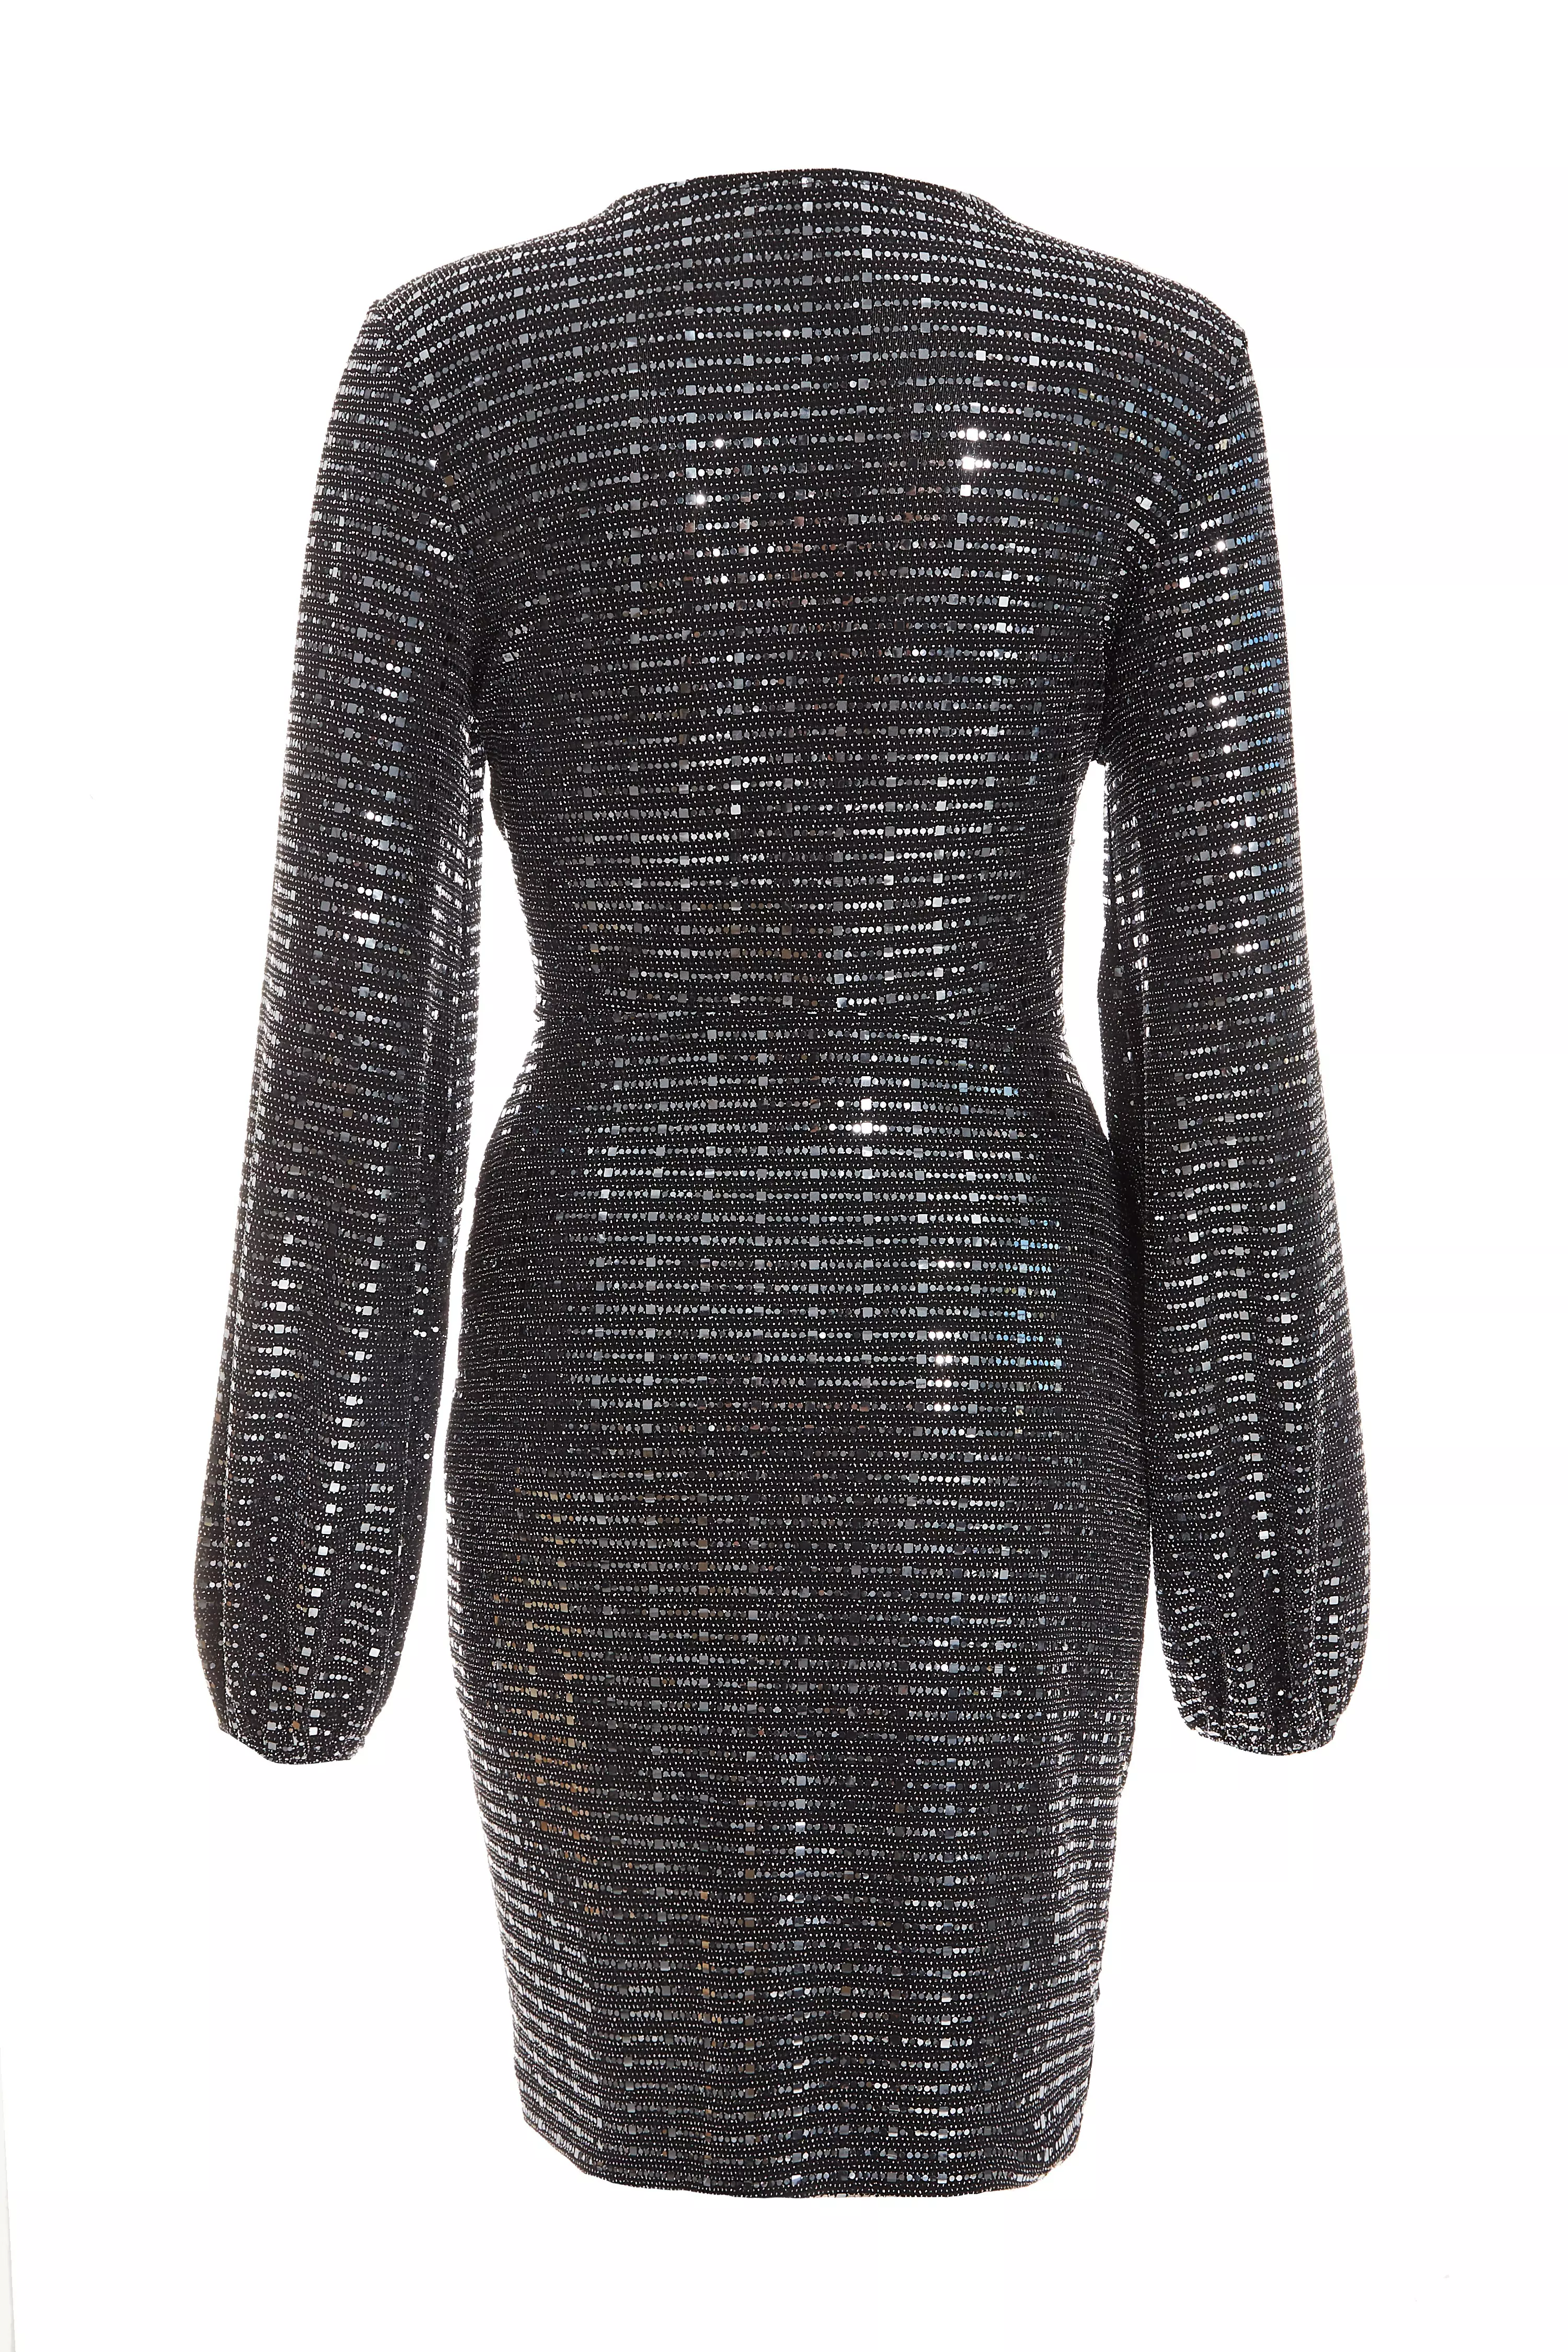 Black Sequin Ruched Bodycon Mini Dress - QUIZ Clothing